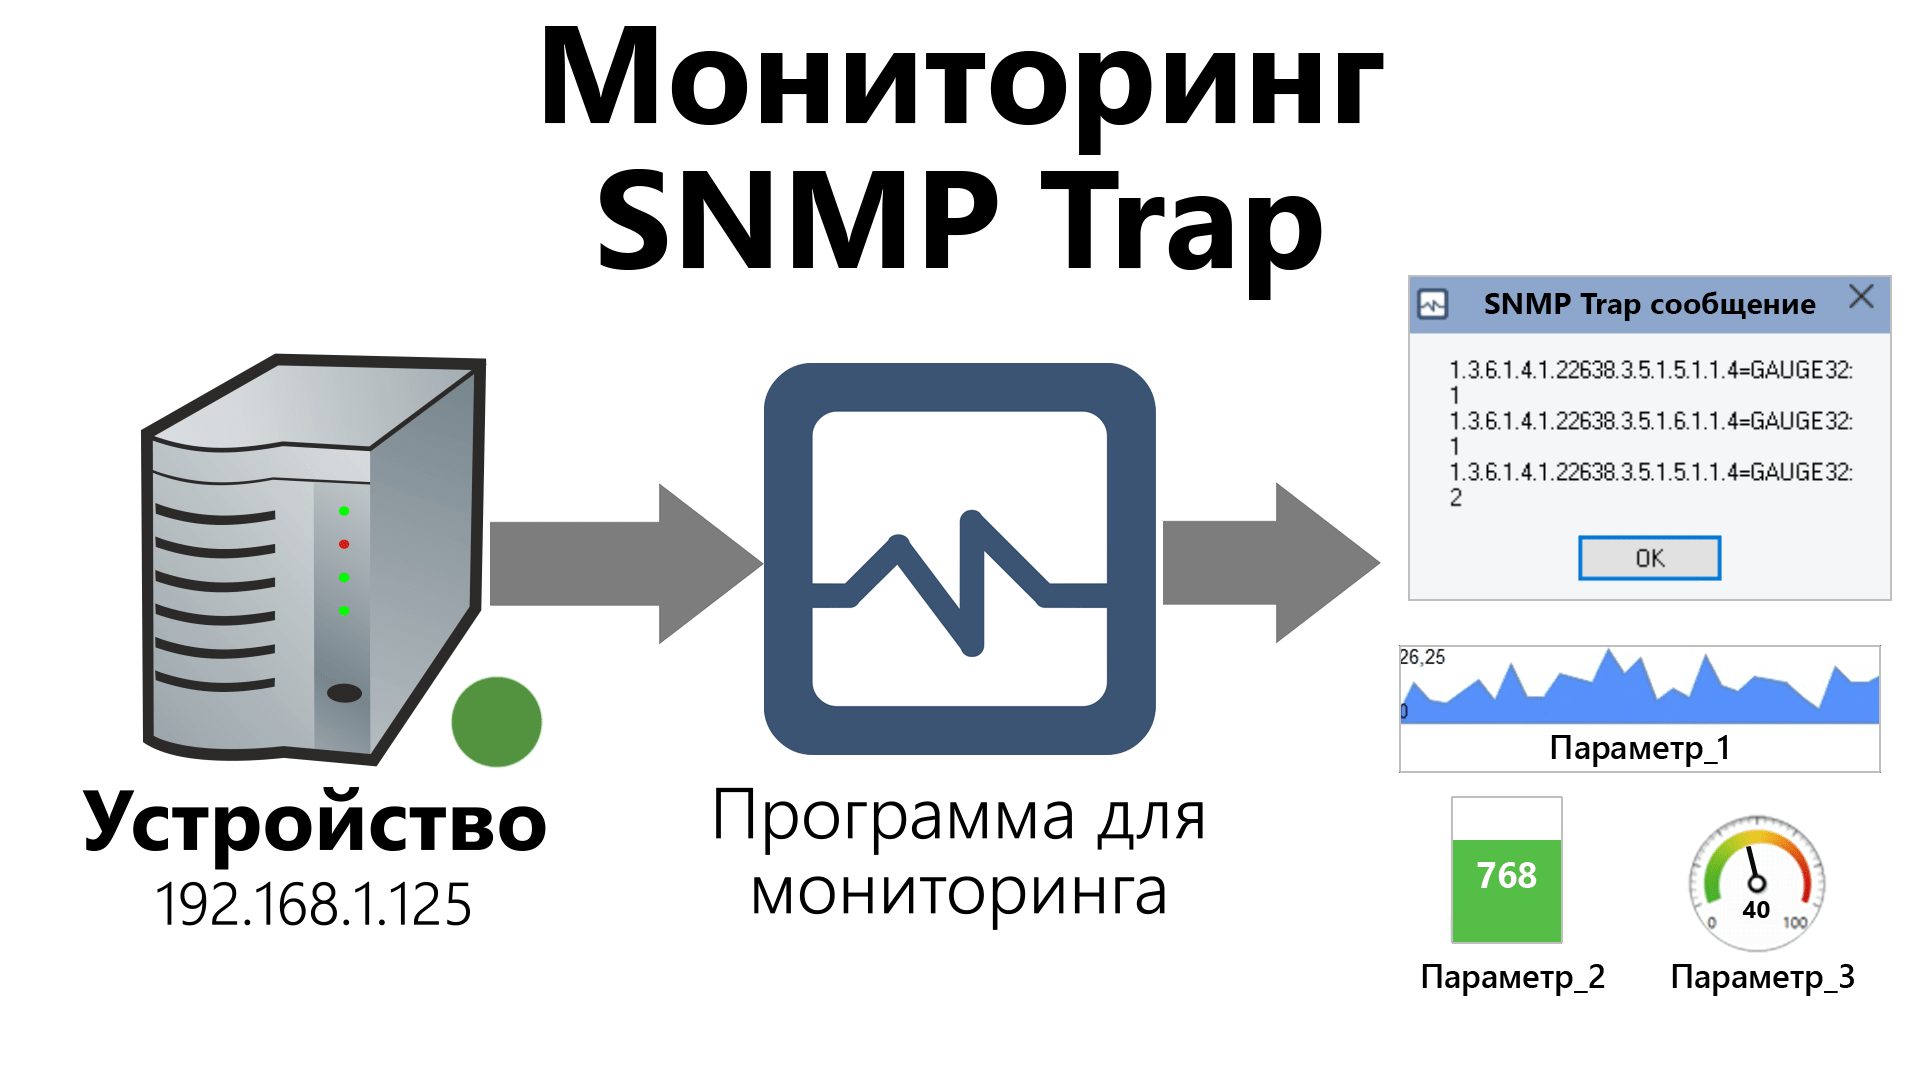 мониторинг snmp trap